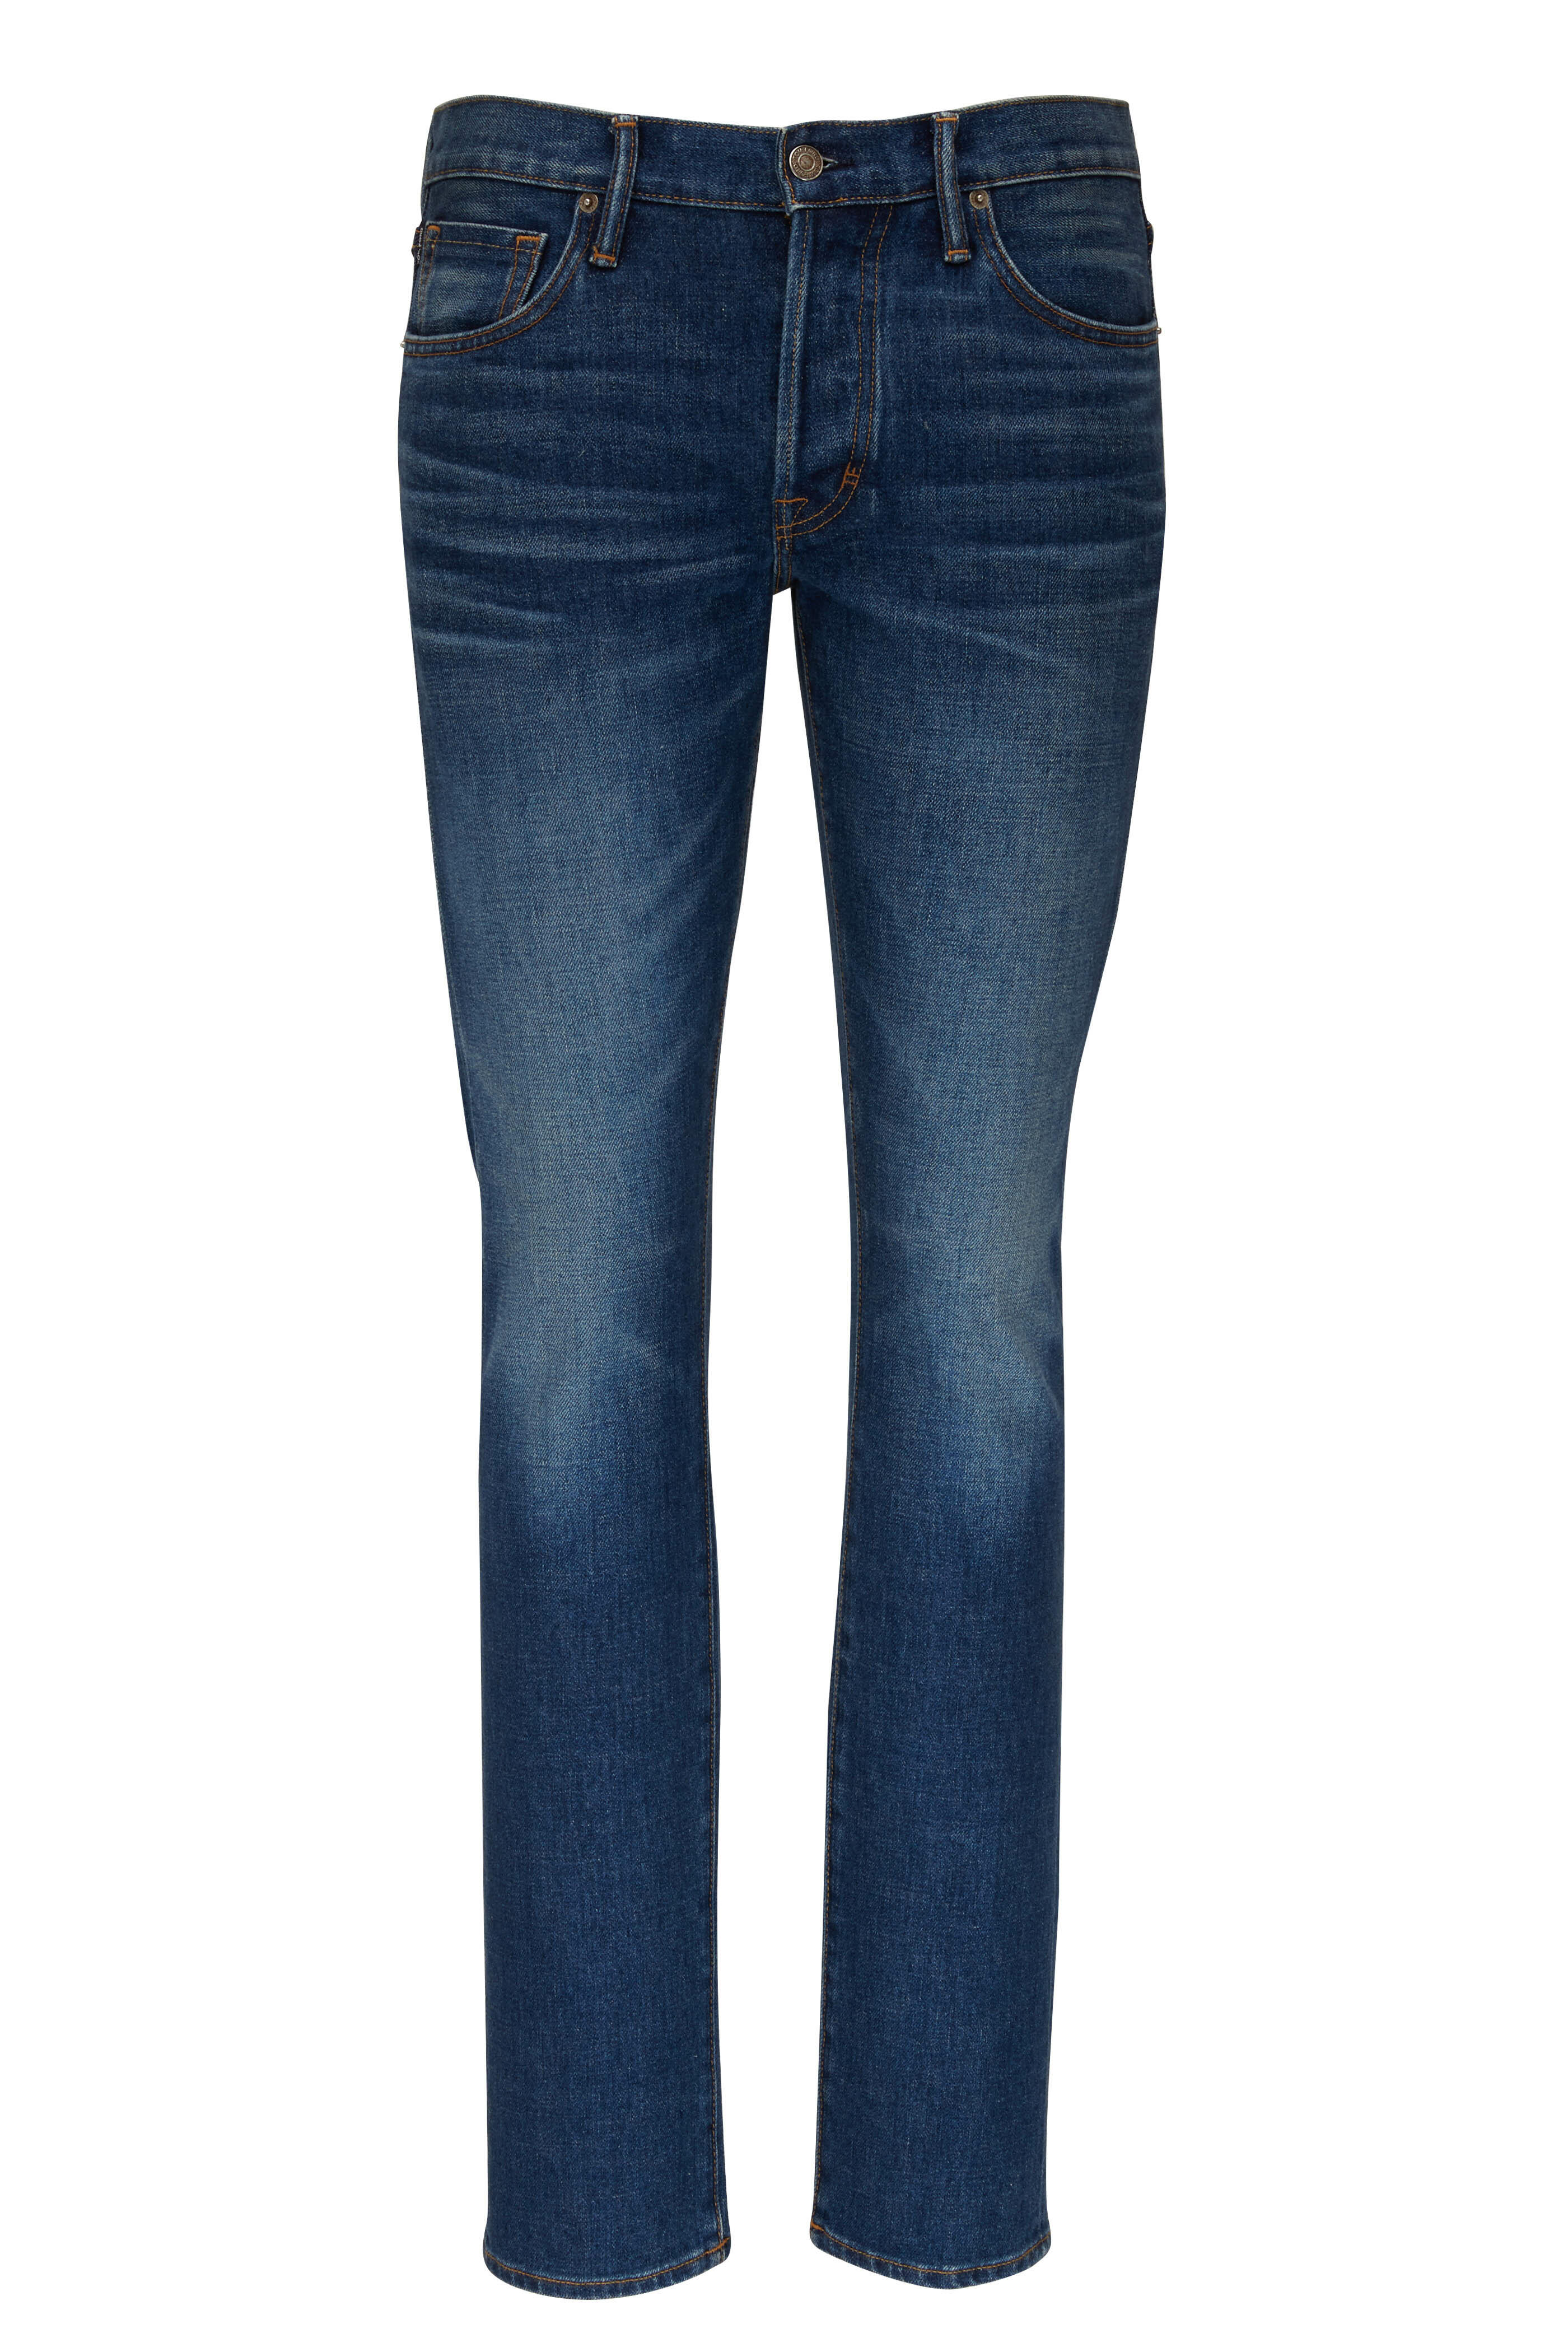 Tom Ford - Blue Medium Wash Slim Fit Jeans